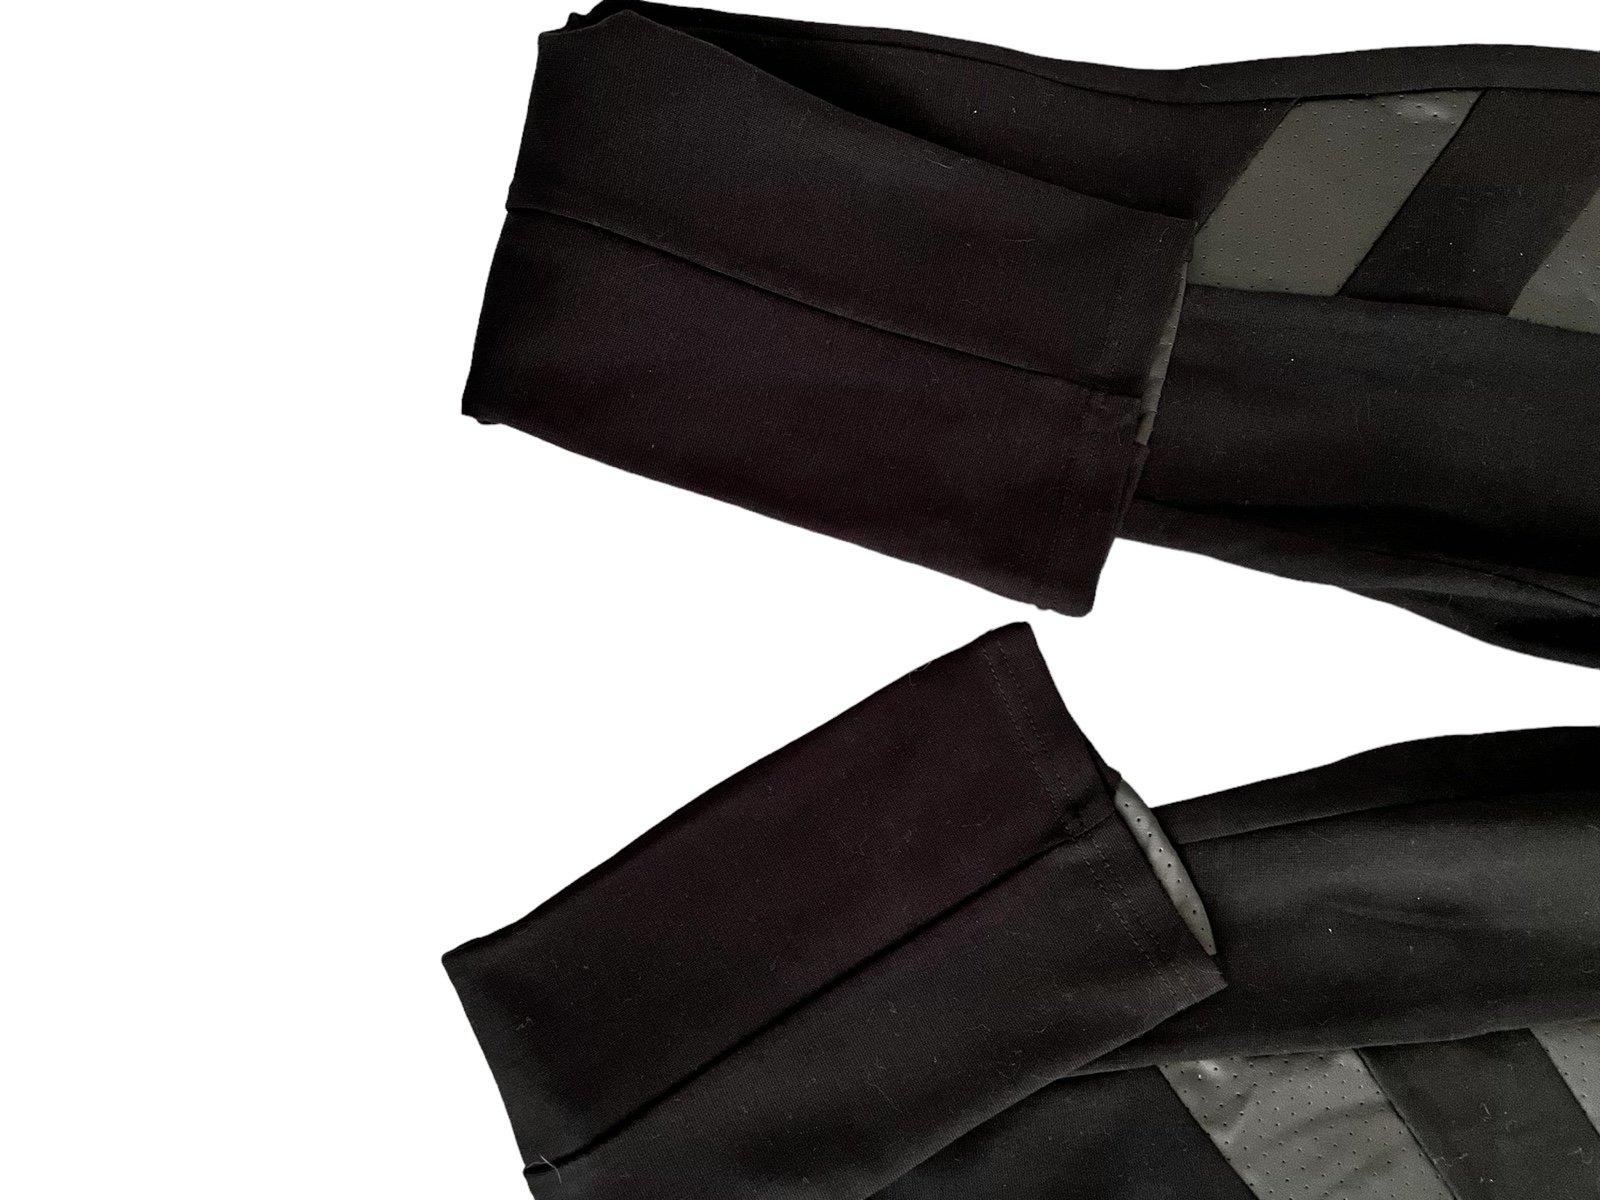 high discount Black Leggings with Vegan Leather Accents Size Medium mINu5x2iR on sale